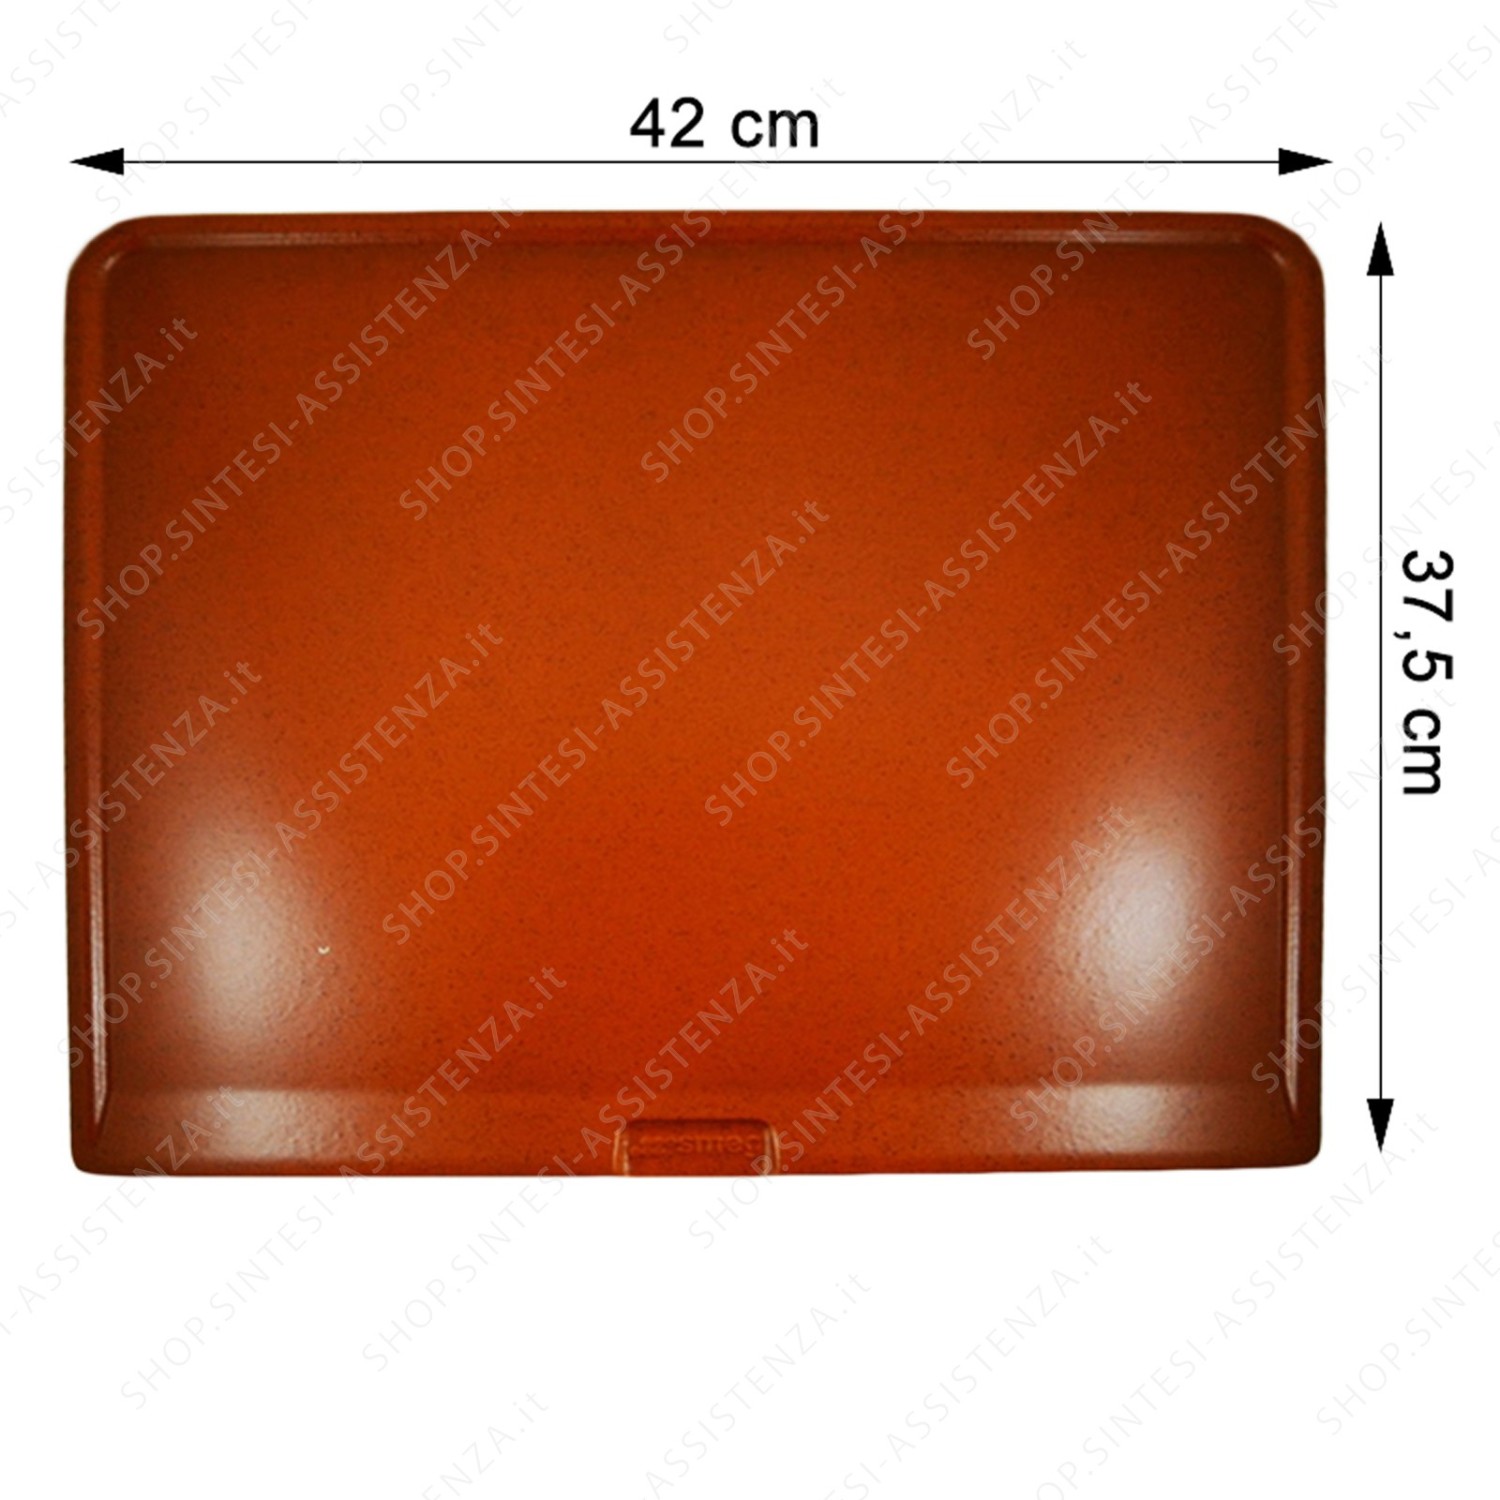 RECTANGULAR REFRACTORY STONE PLATE 42 x 37.5 CM FOR SMEG PIZZA OVEN - PPR2